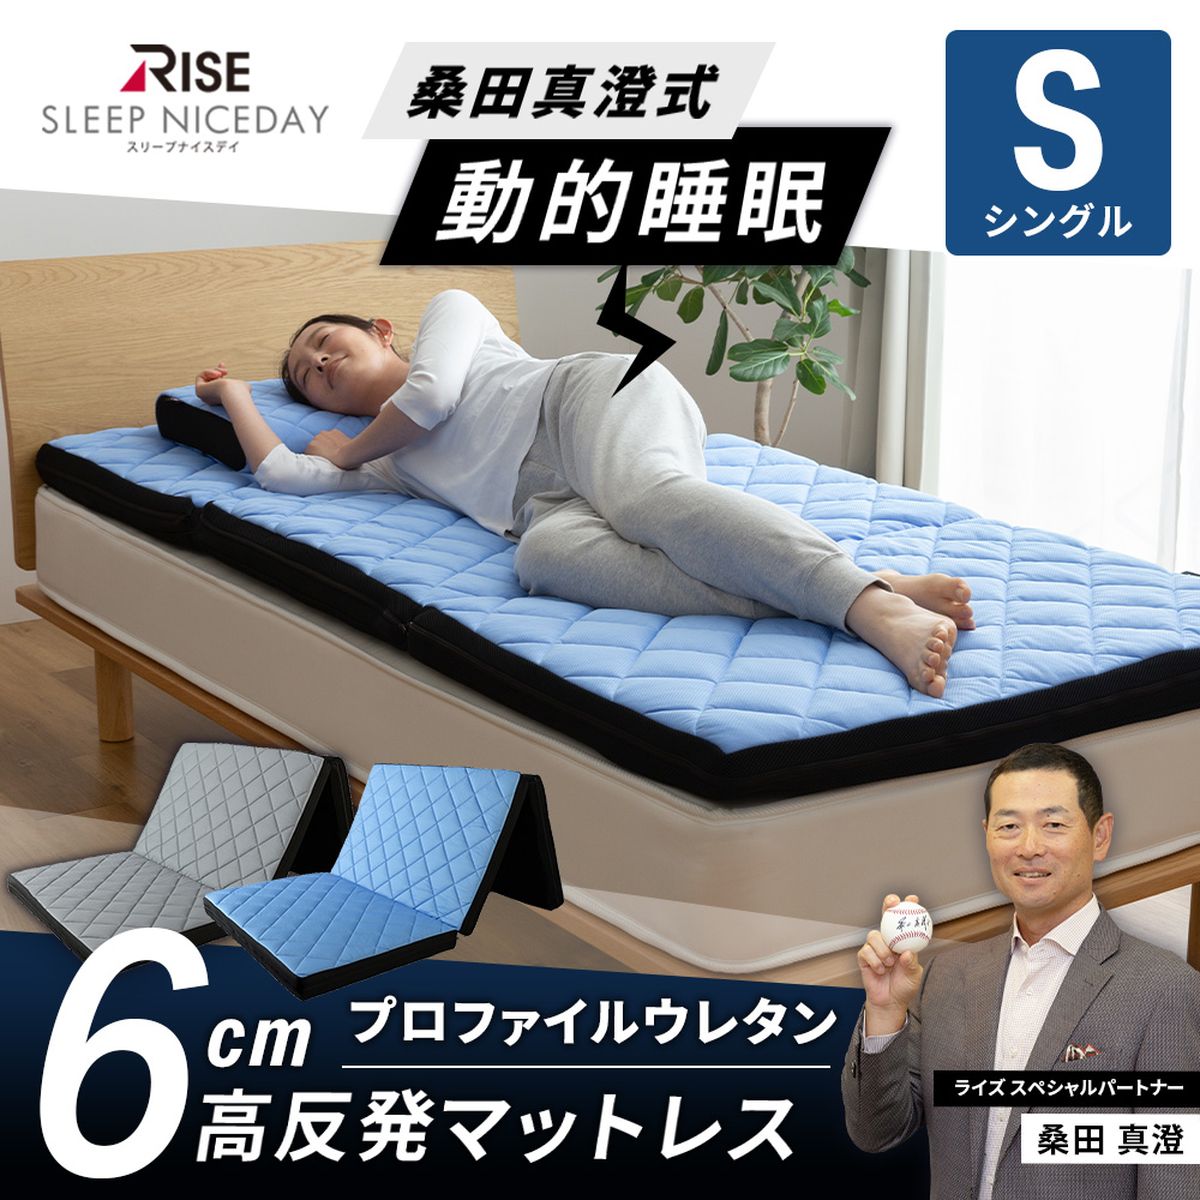 RISE Sleep Niceday 桑田真澄式 動的睡眠 高反発マットレス6cm シングル ブルー